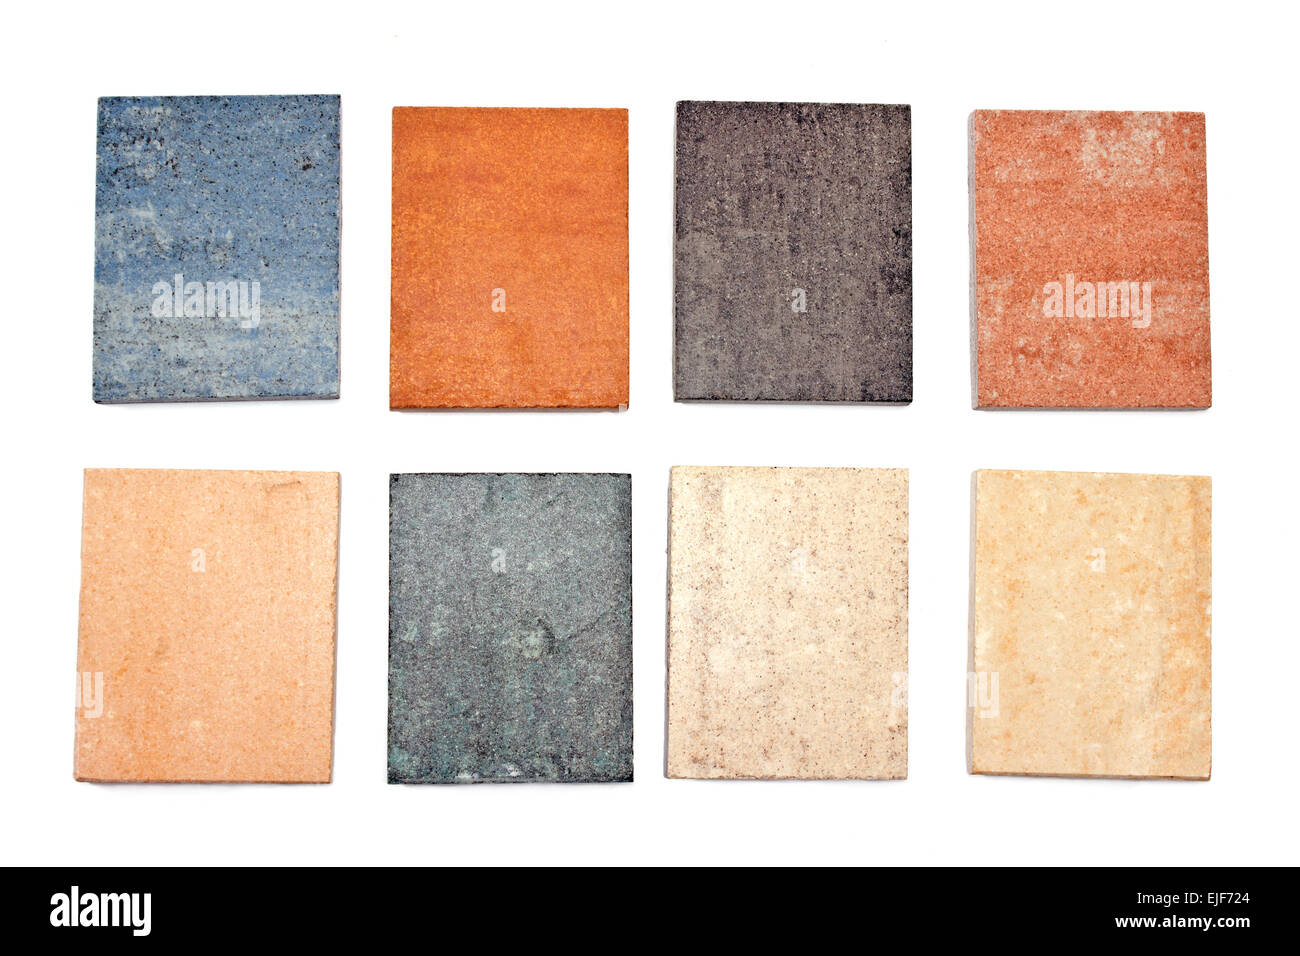 Bunter Granit Textur Proben Sammlung Katalog Stockfoto